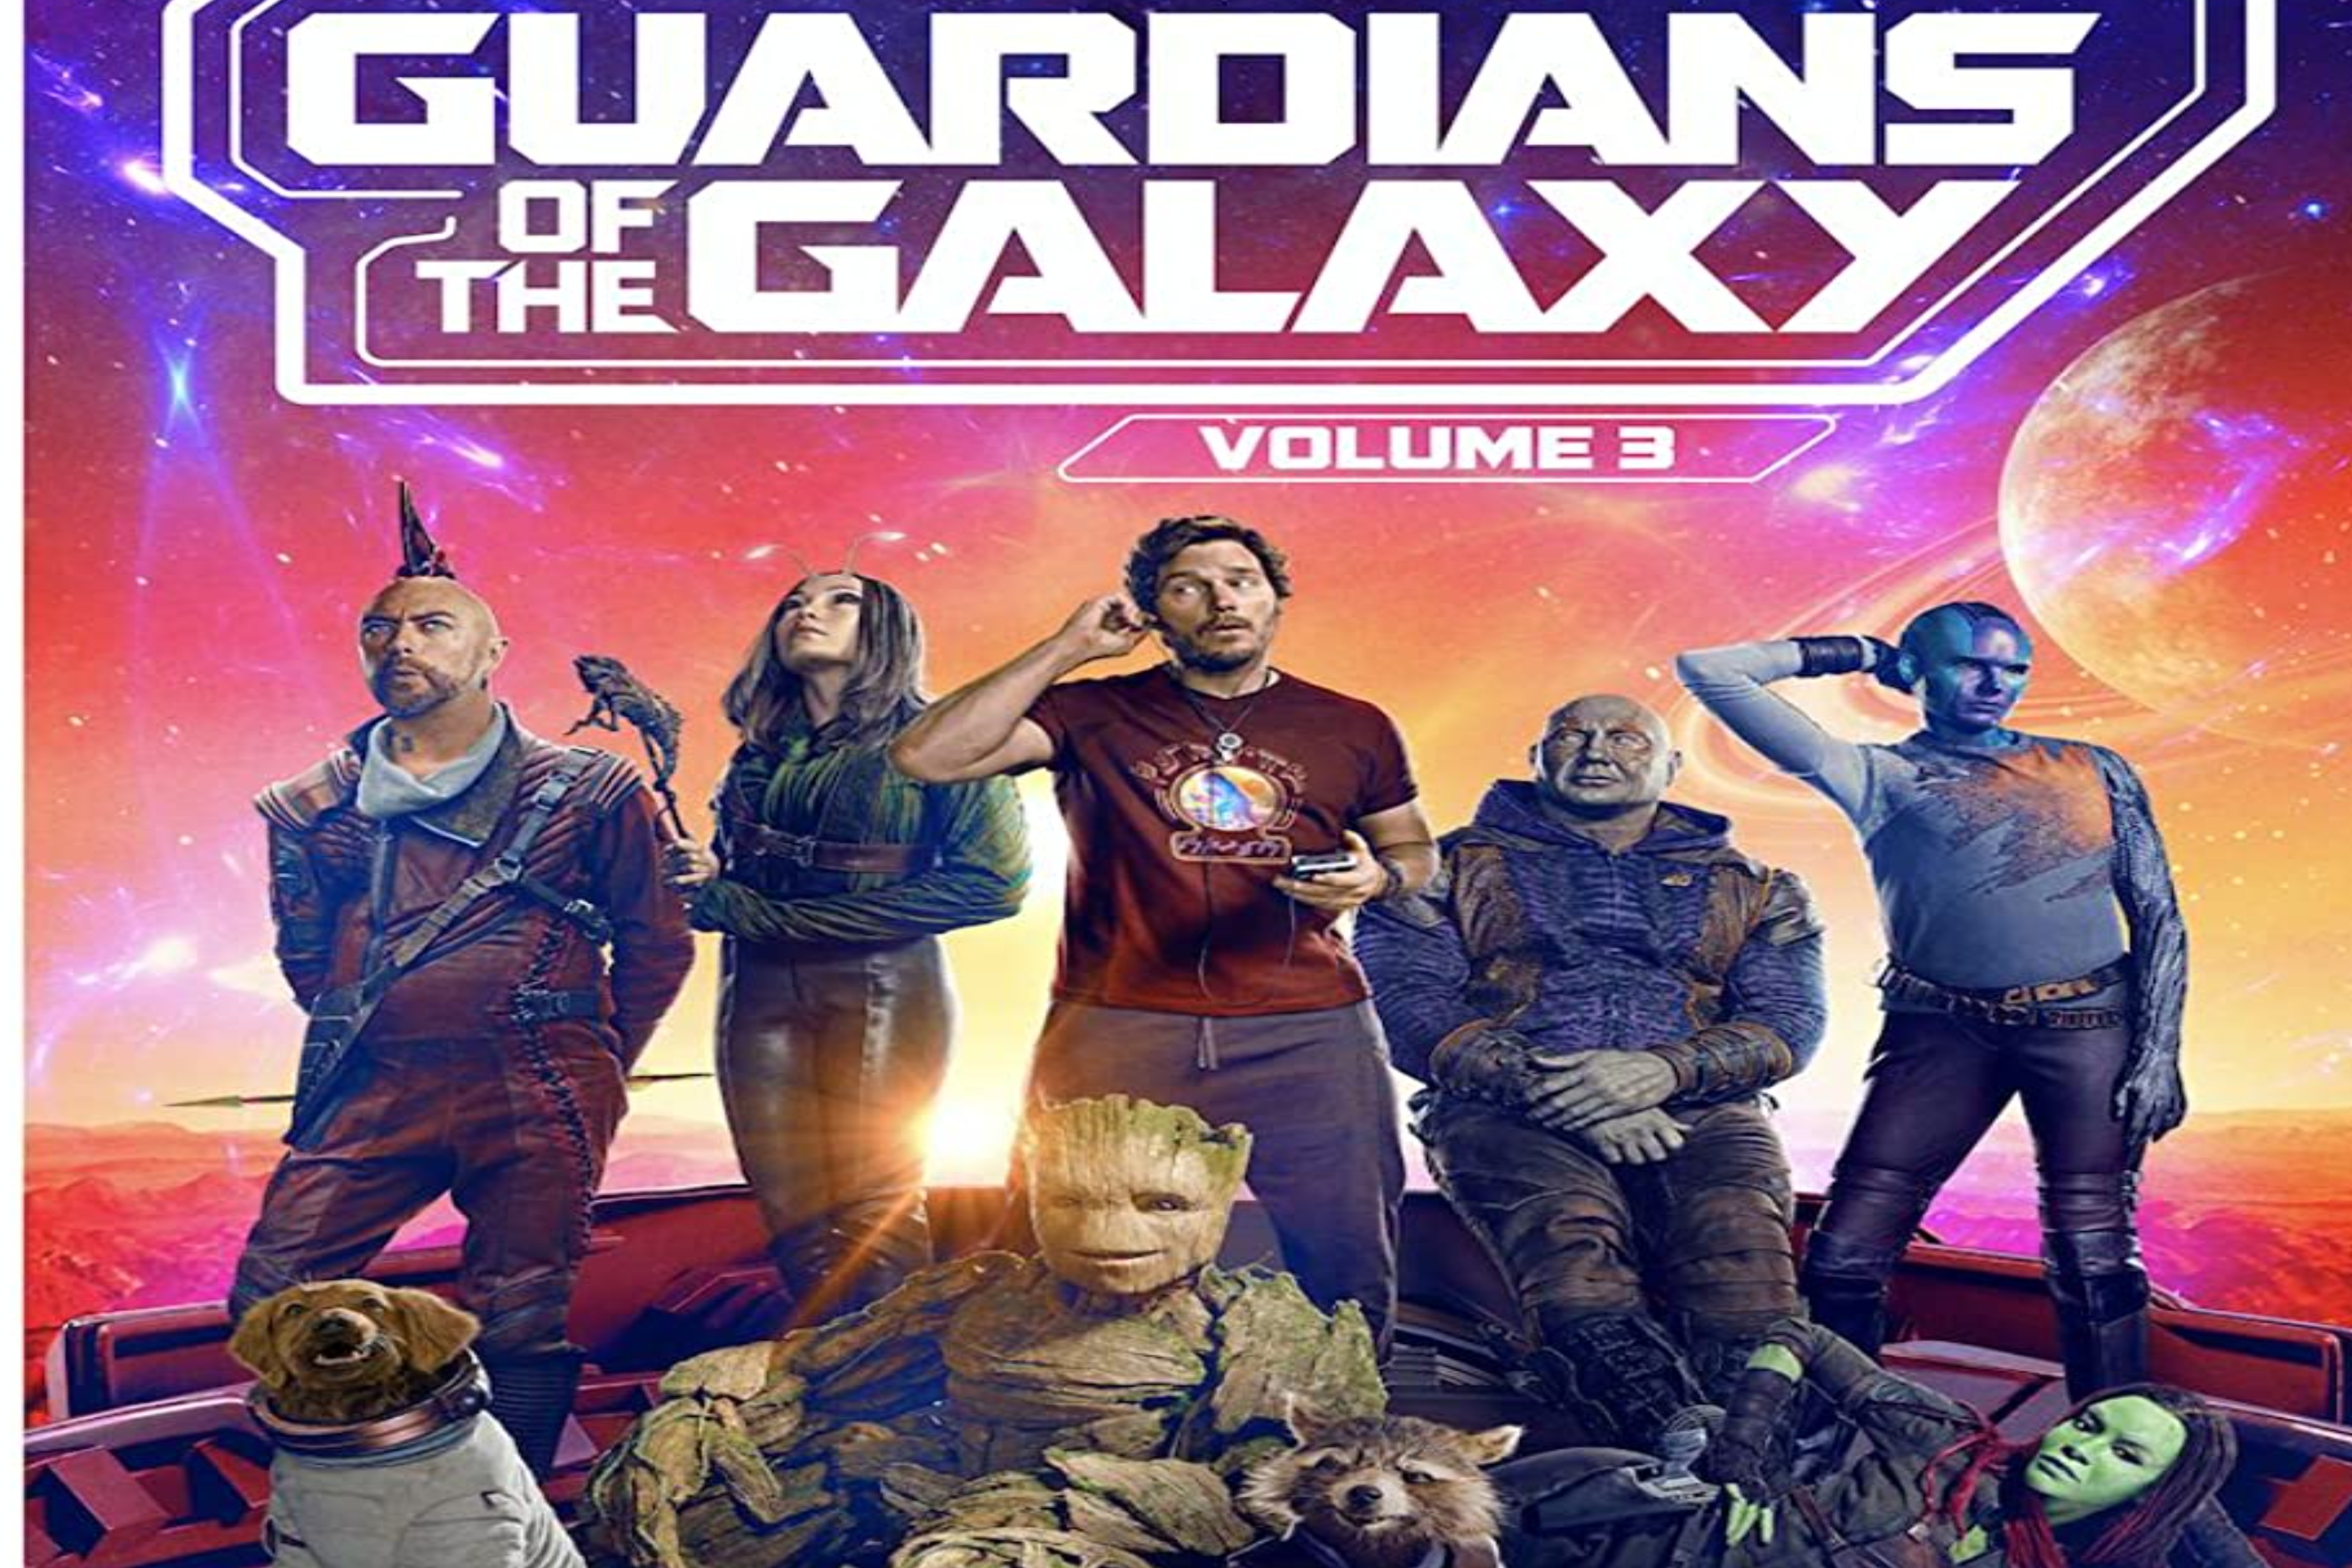 Celebrity director James Gunn’s final Marvel movie ‘Guardians of the Galaxy: Vol. 3’ earns $282.1 million